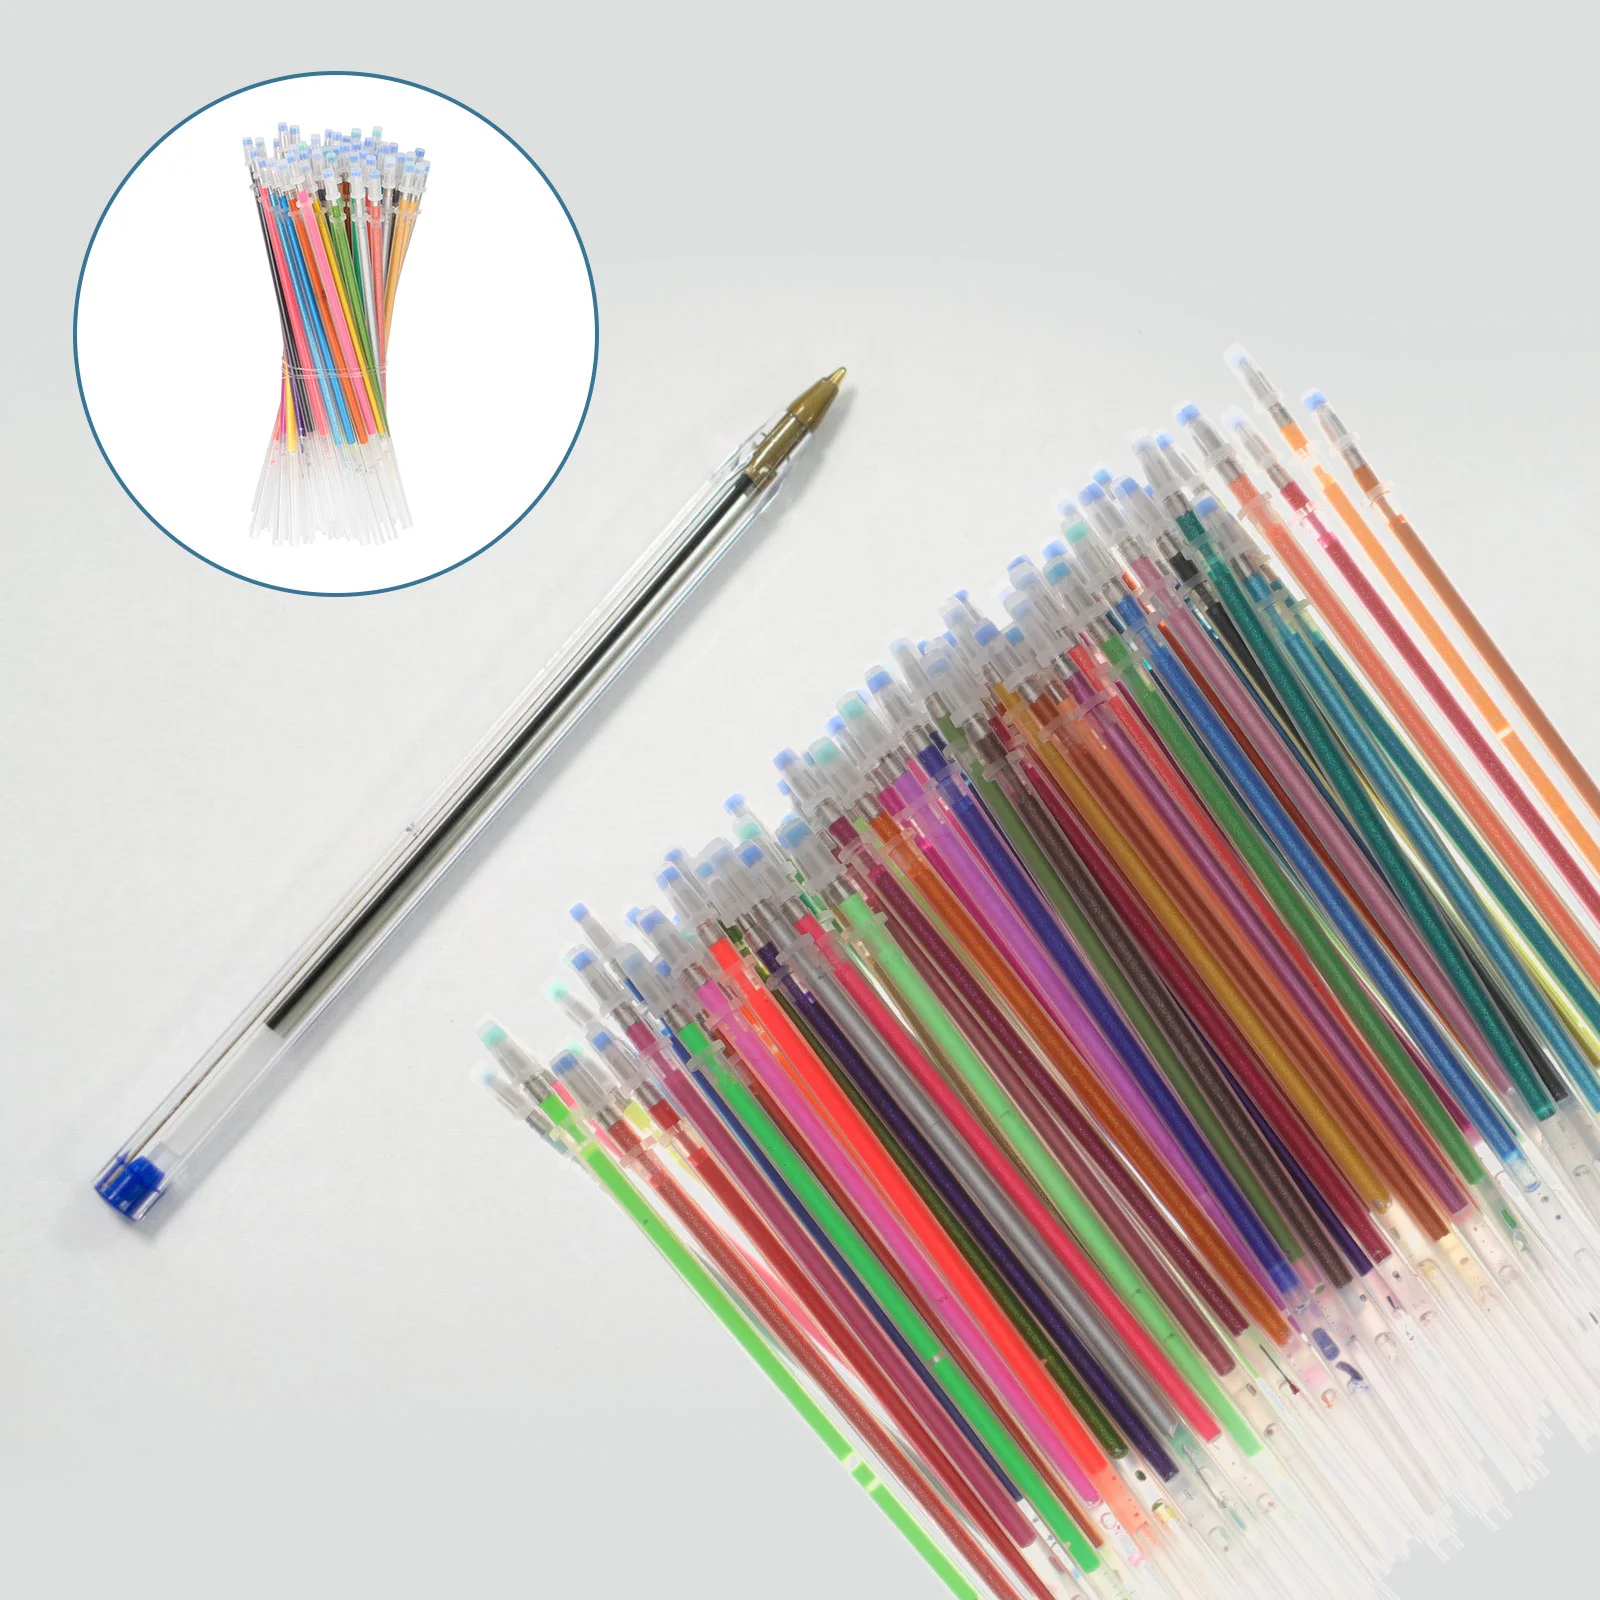 

84 Pcs Gel Refill Set Pen Replacement Refills Filling Drawing Doodling Plastic Glitter Student Bullet Tip